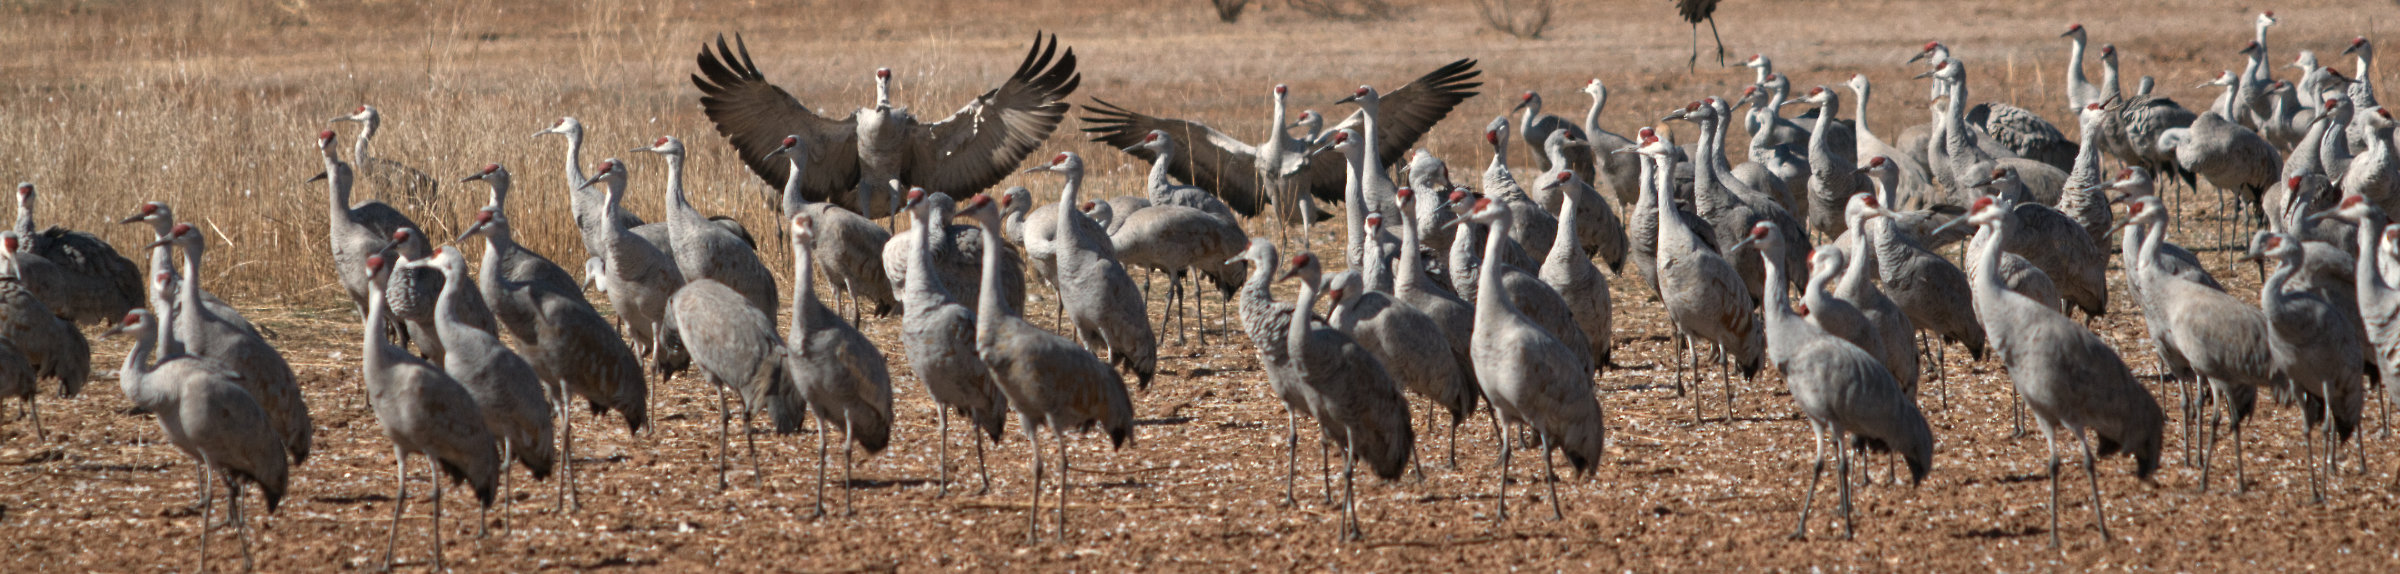 Image: cranes